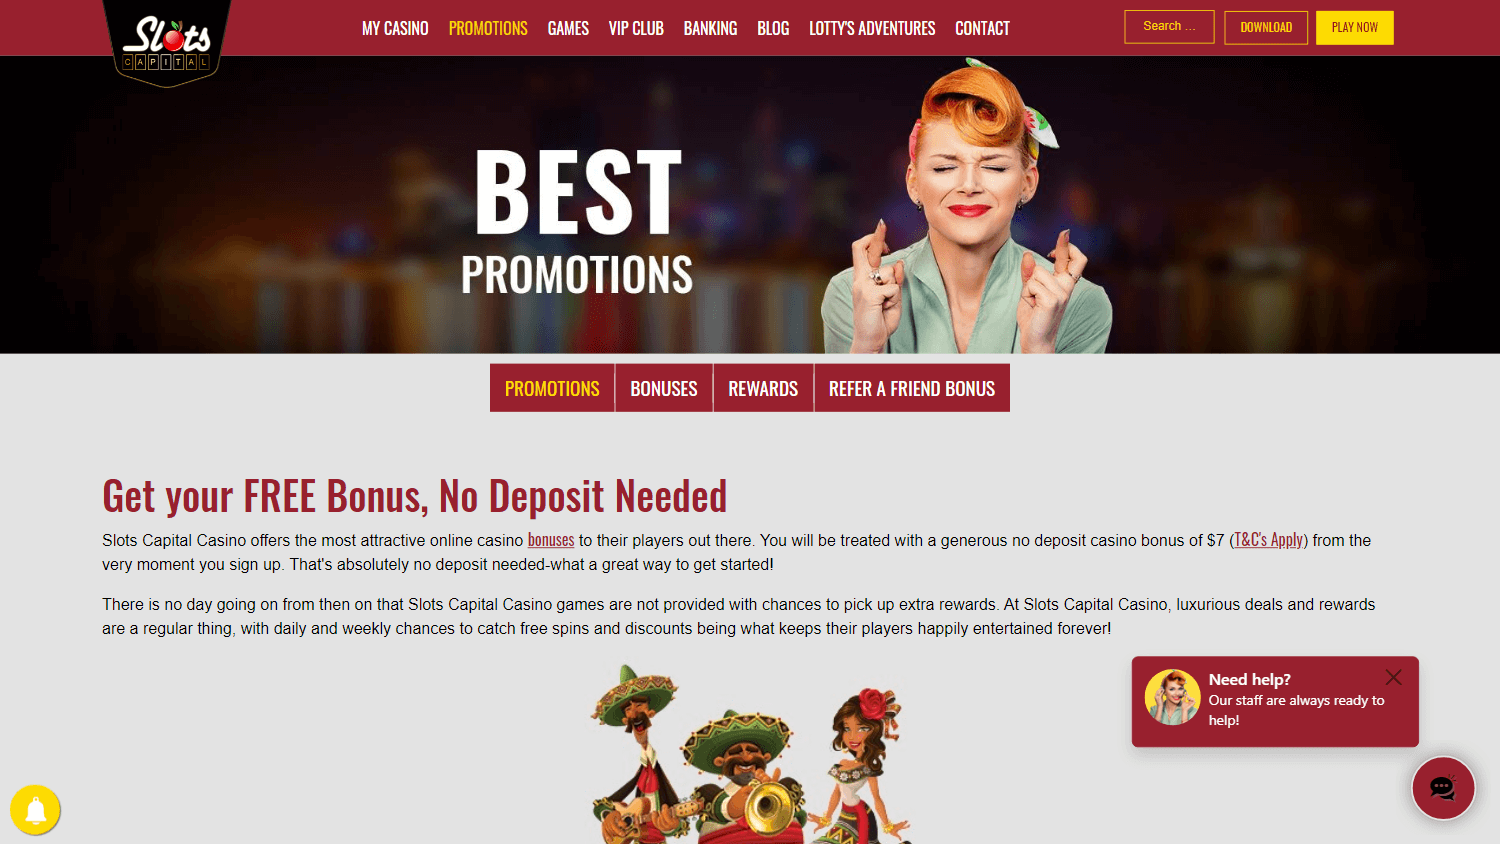 slots_capital_casino_promotions_desktop